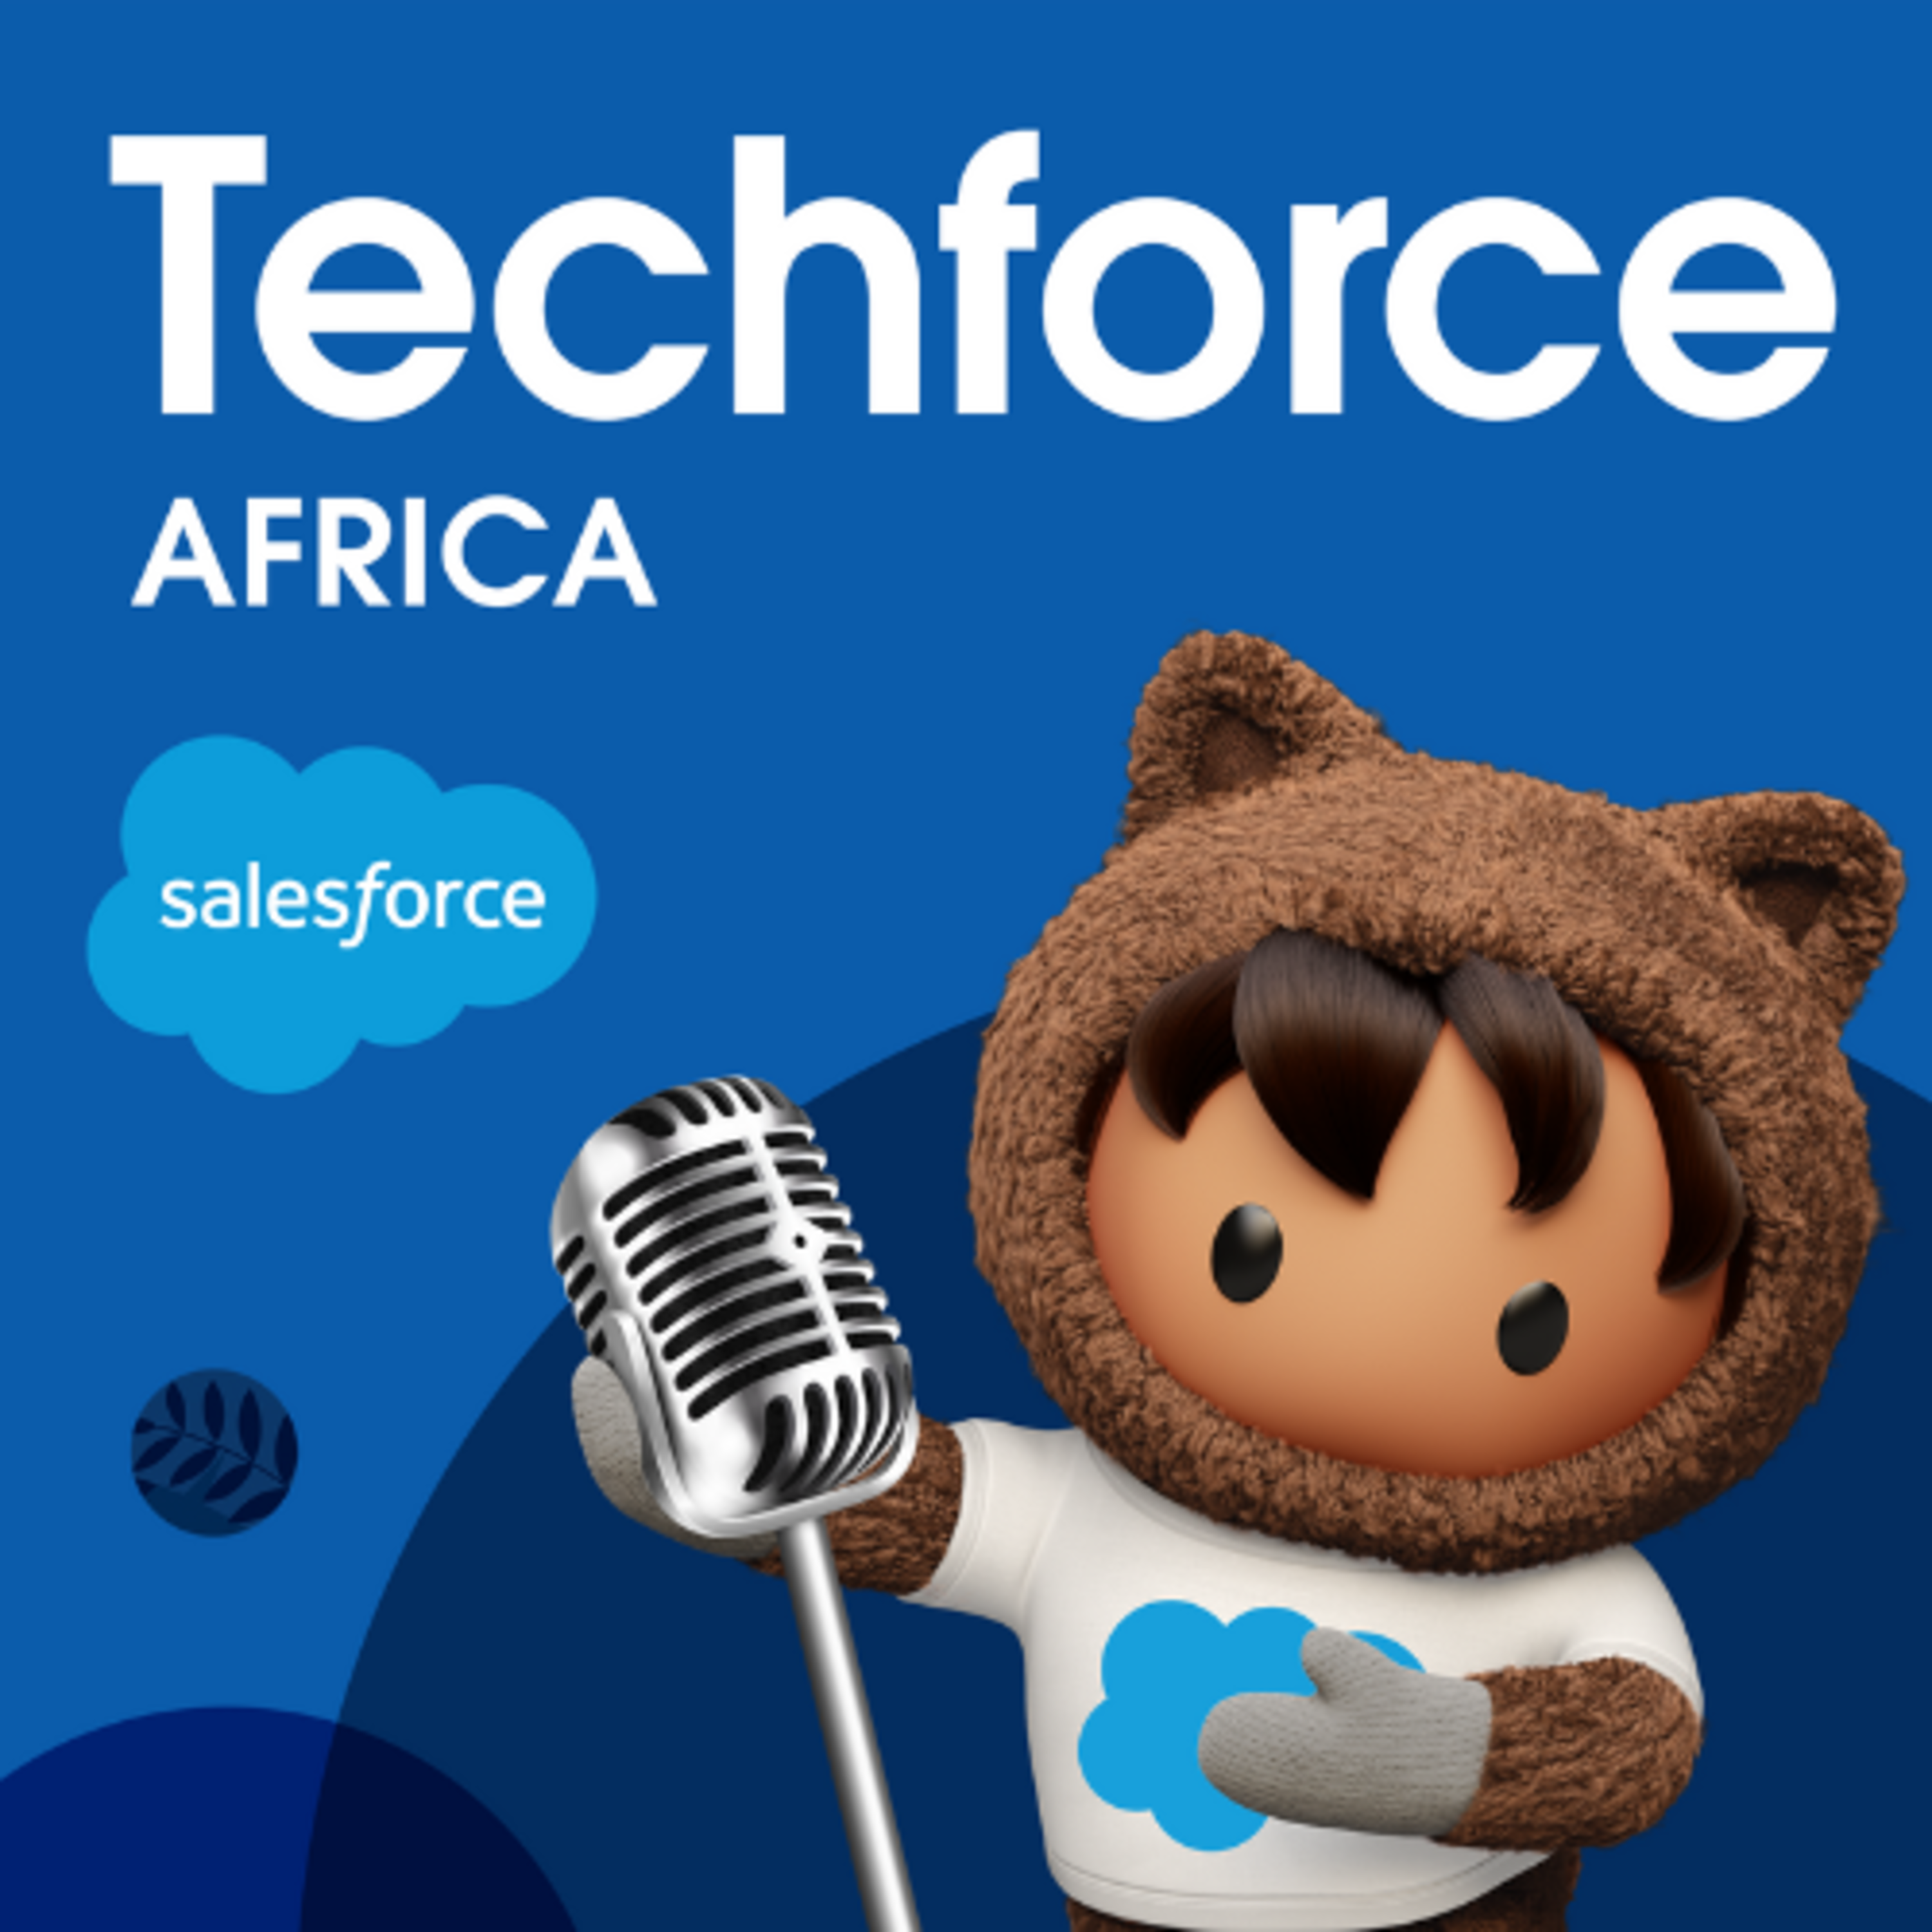 Techforce in Africa